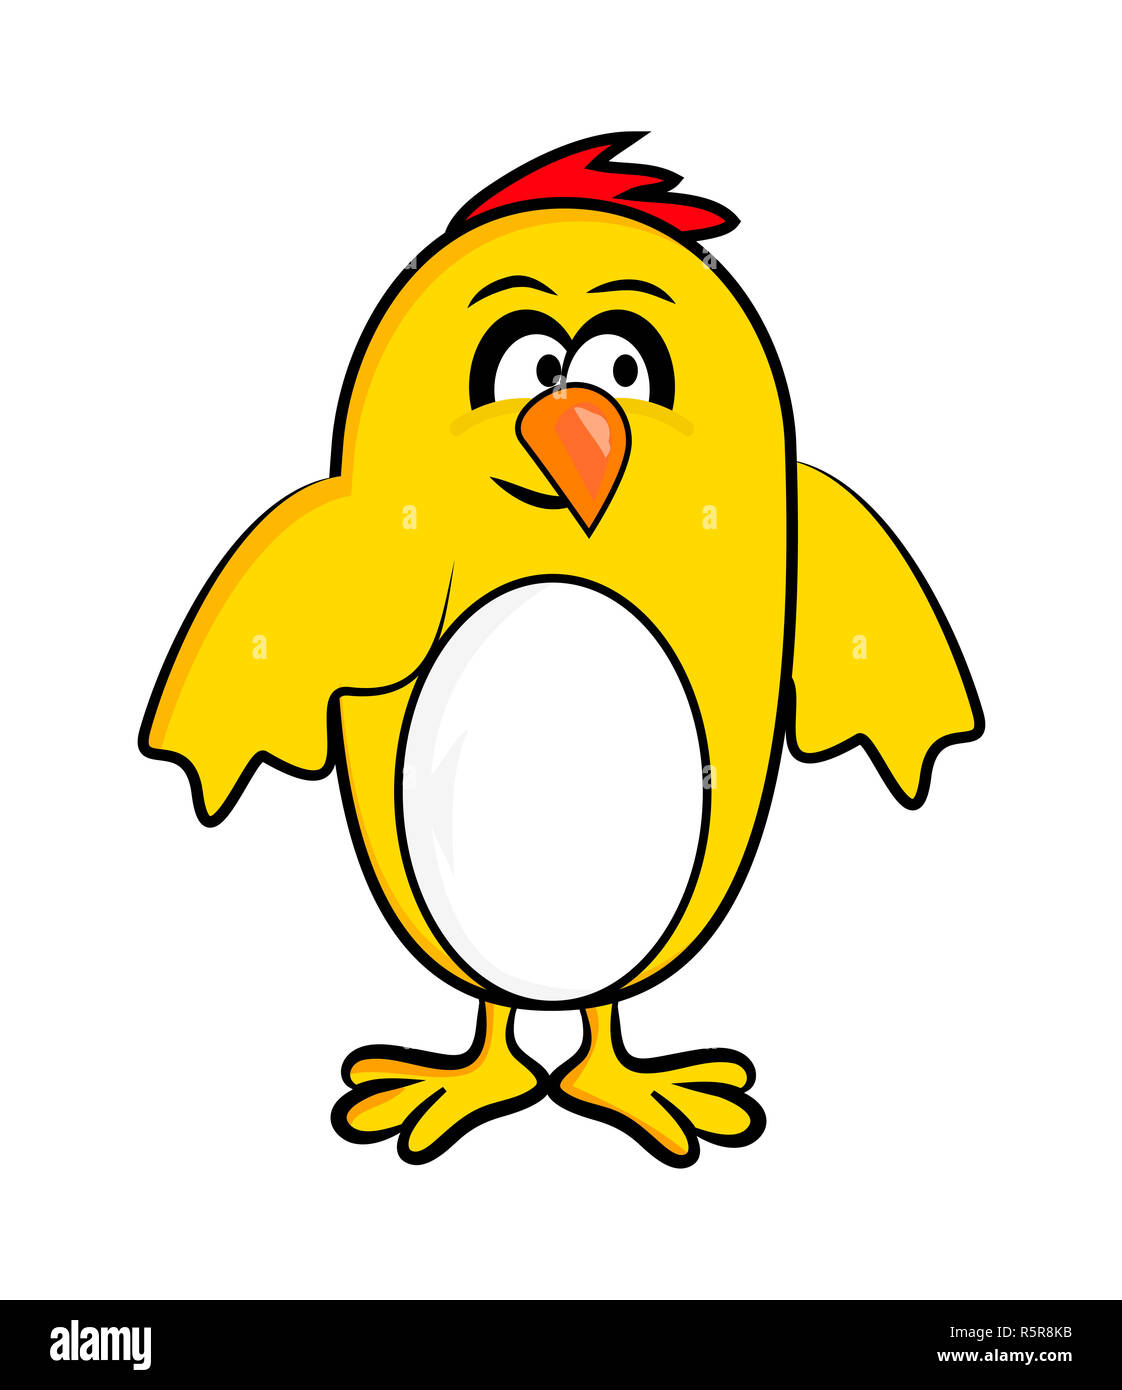 https://c8.alamy.com/comp/R5R8KB/cartoon-easter-chicken-vector-symbol-icon-design-R5R8KB.jpg